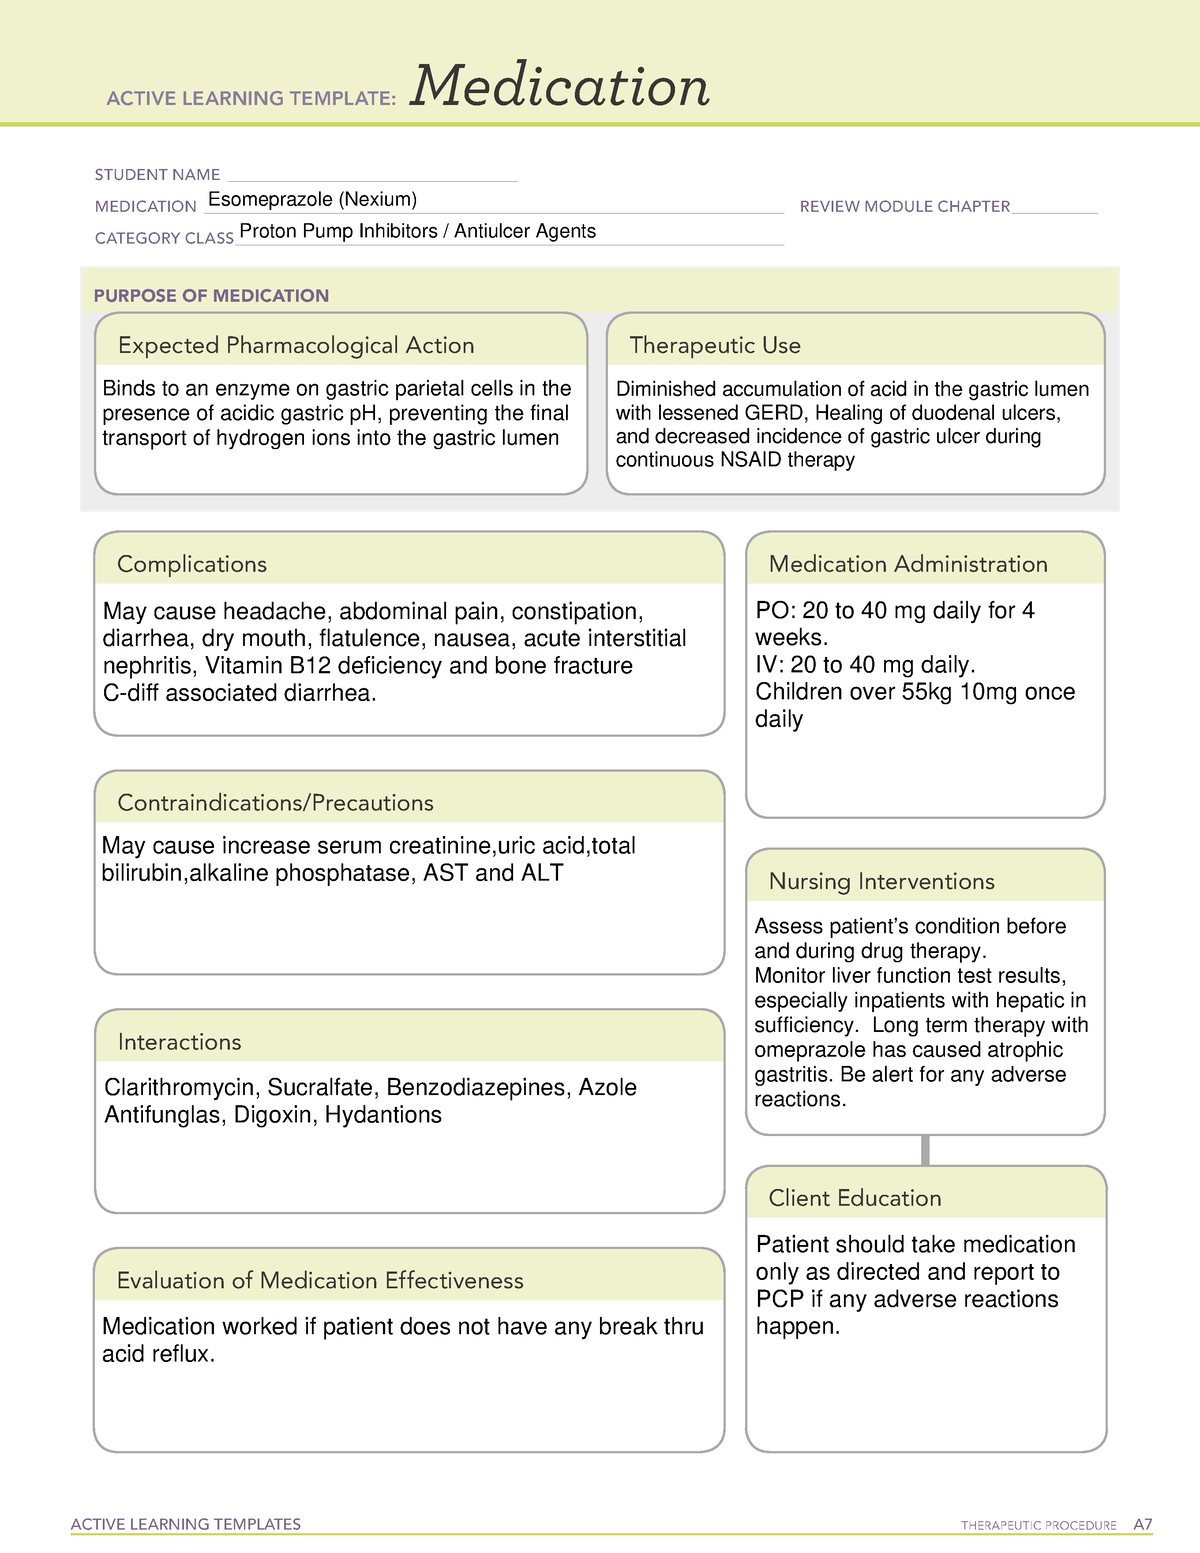 ati-esomeprazole-nexium-medication-sheet-active-learning-templates-therapeutic-procedure-a